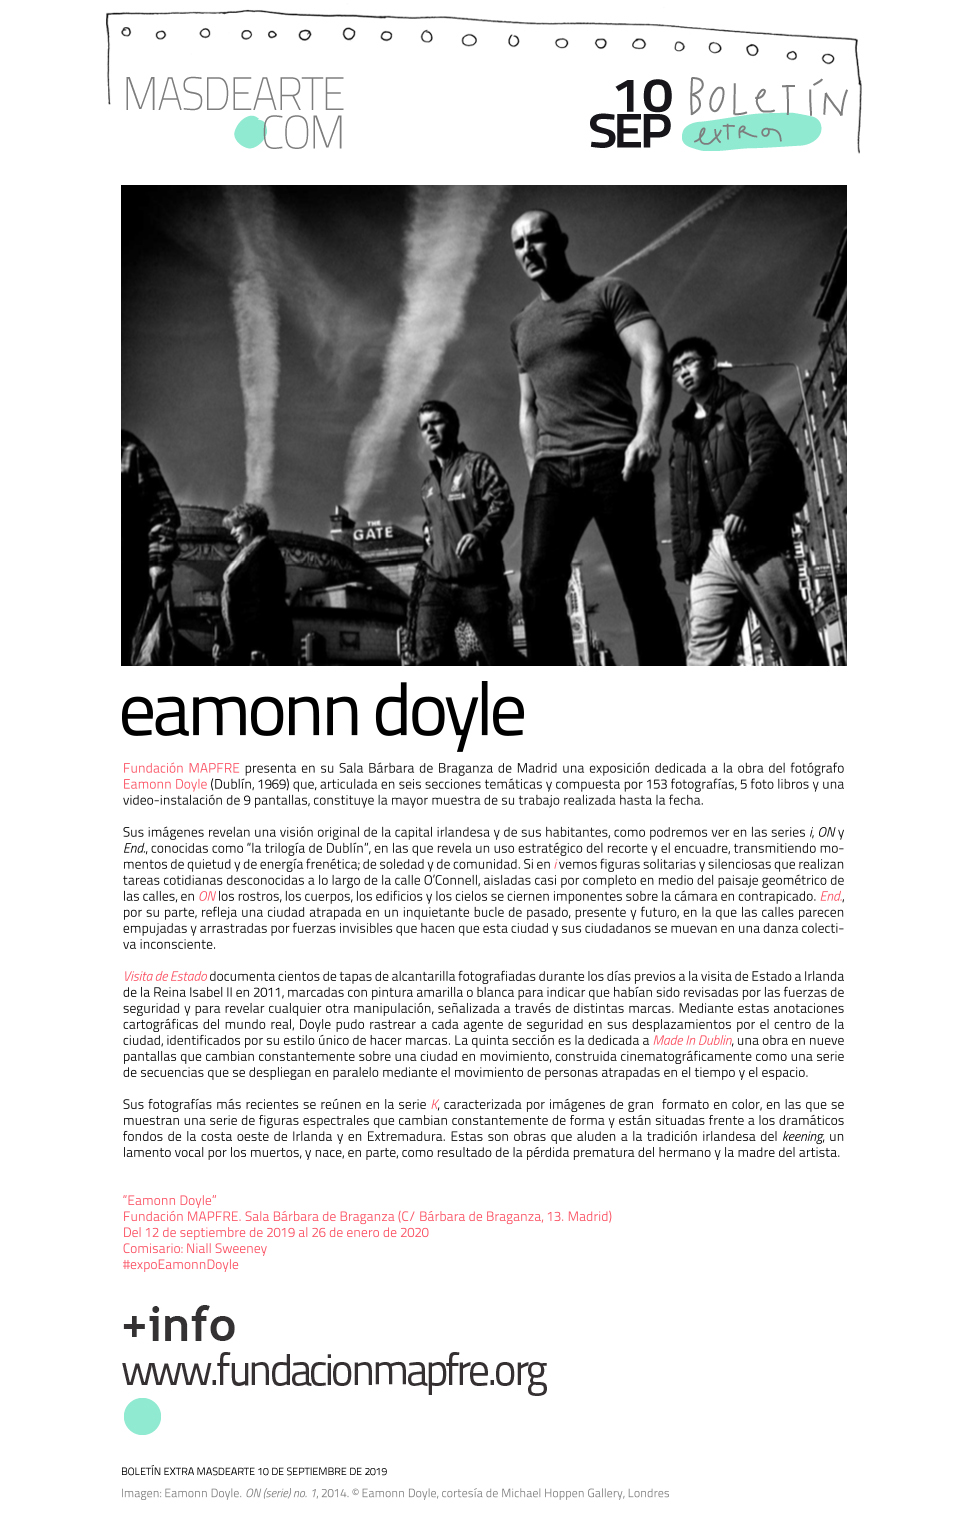 Extra masdearte: Fundación MAPFRE presenta una retrospectiva de Eamonn Doyle